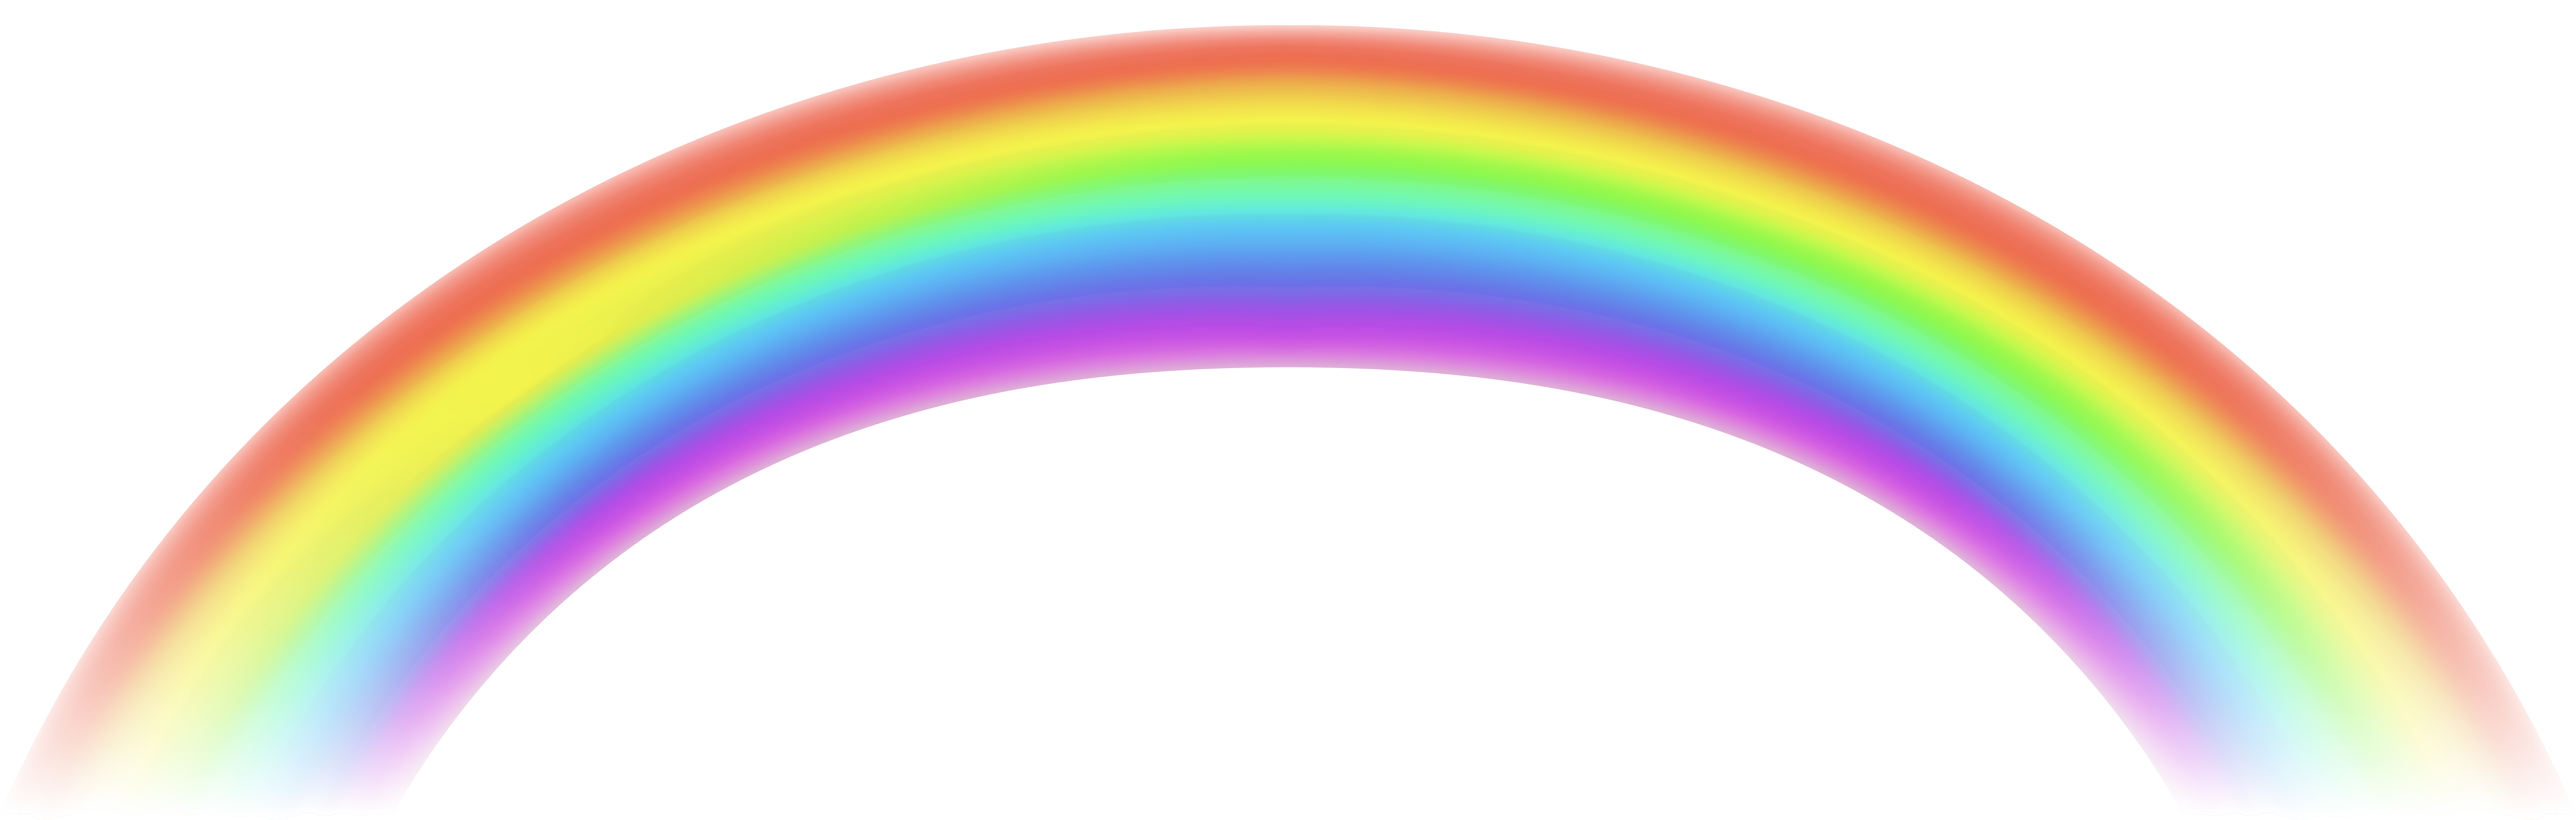 rainbow clipart transparent - photo #7